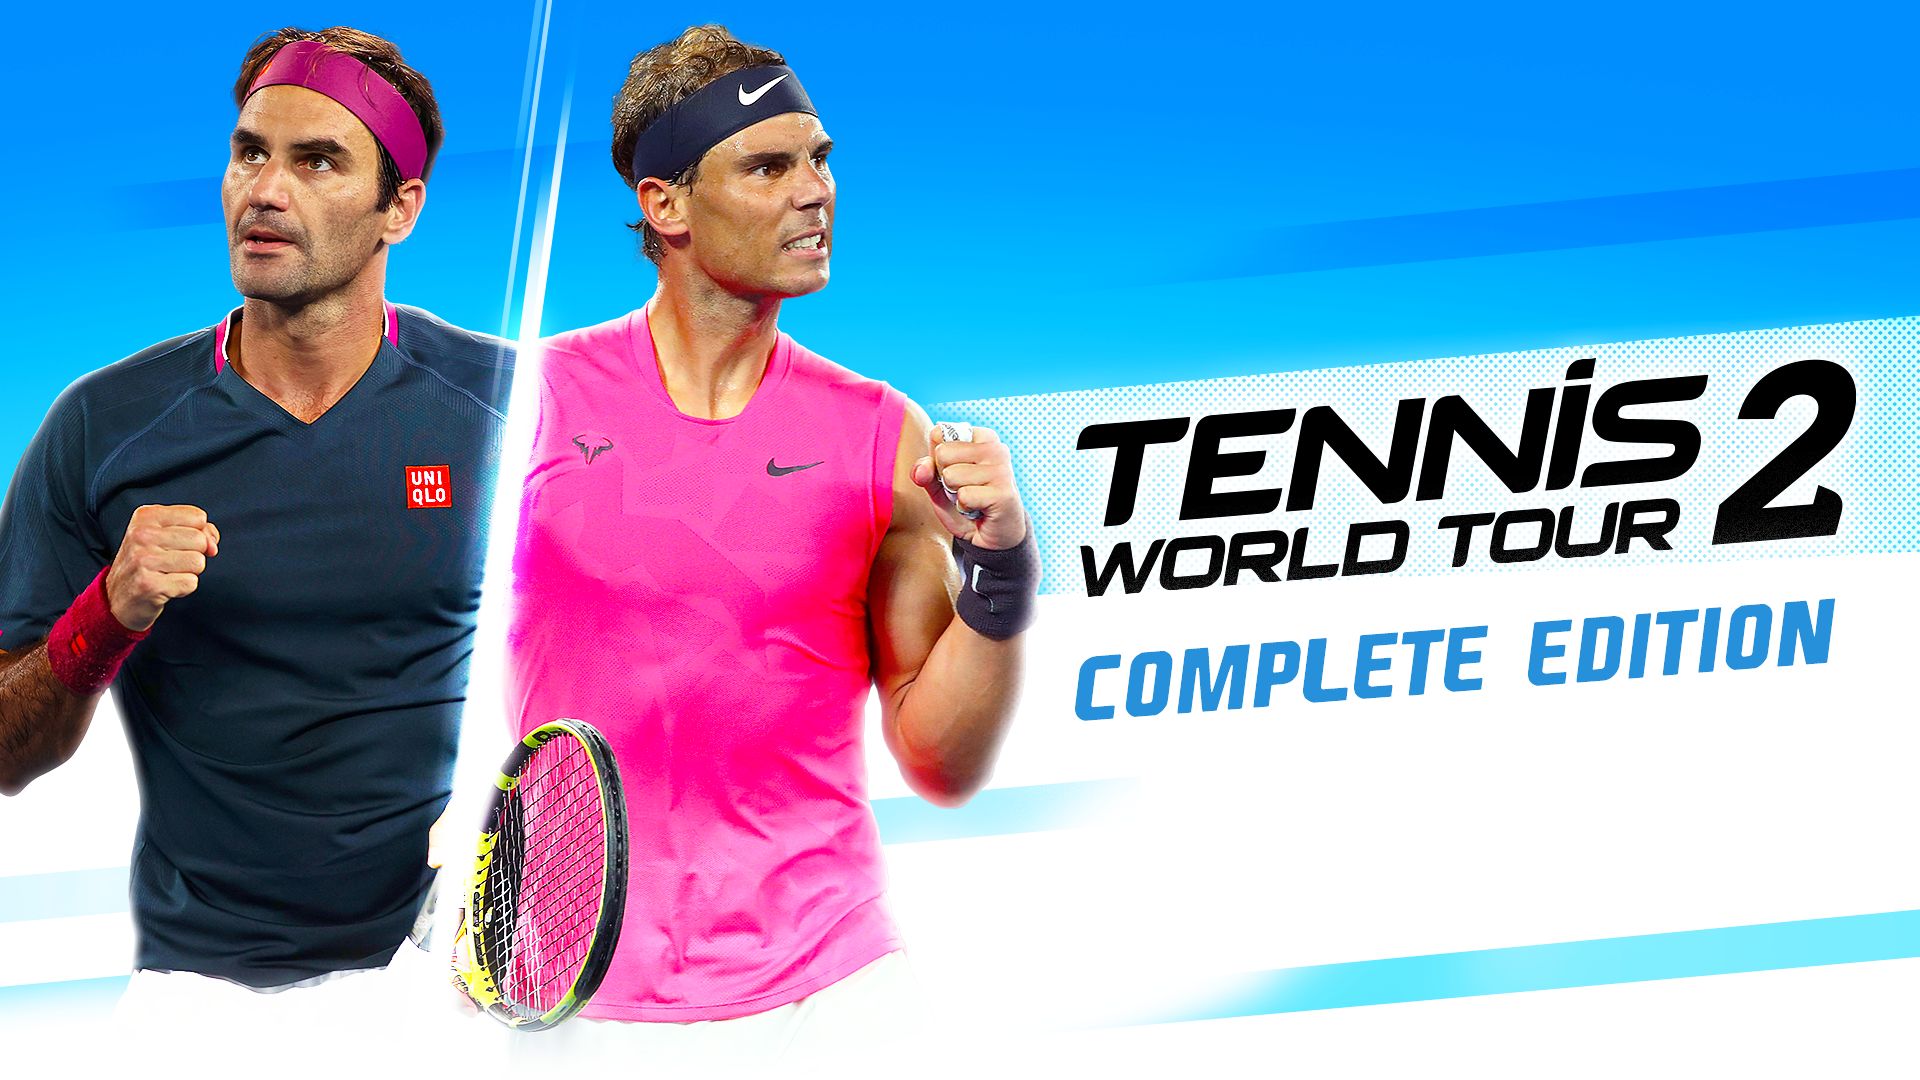 Tennis World Tour 2 – Complete Edition